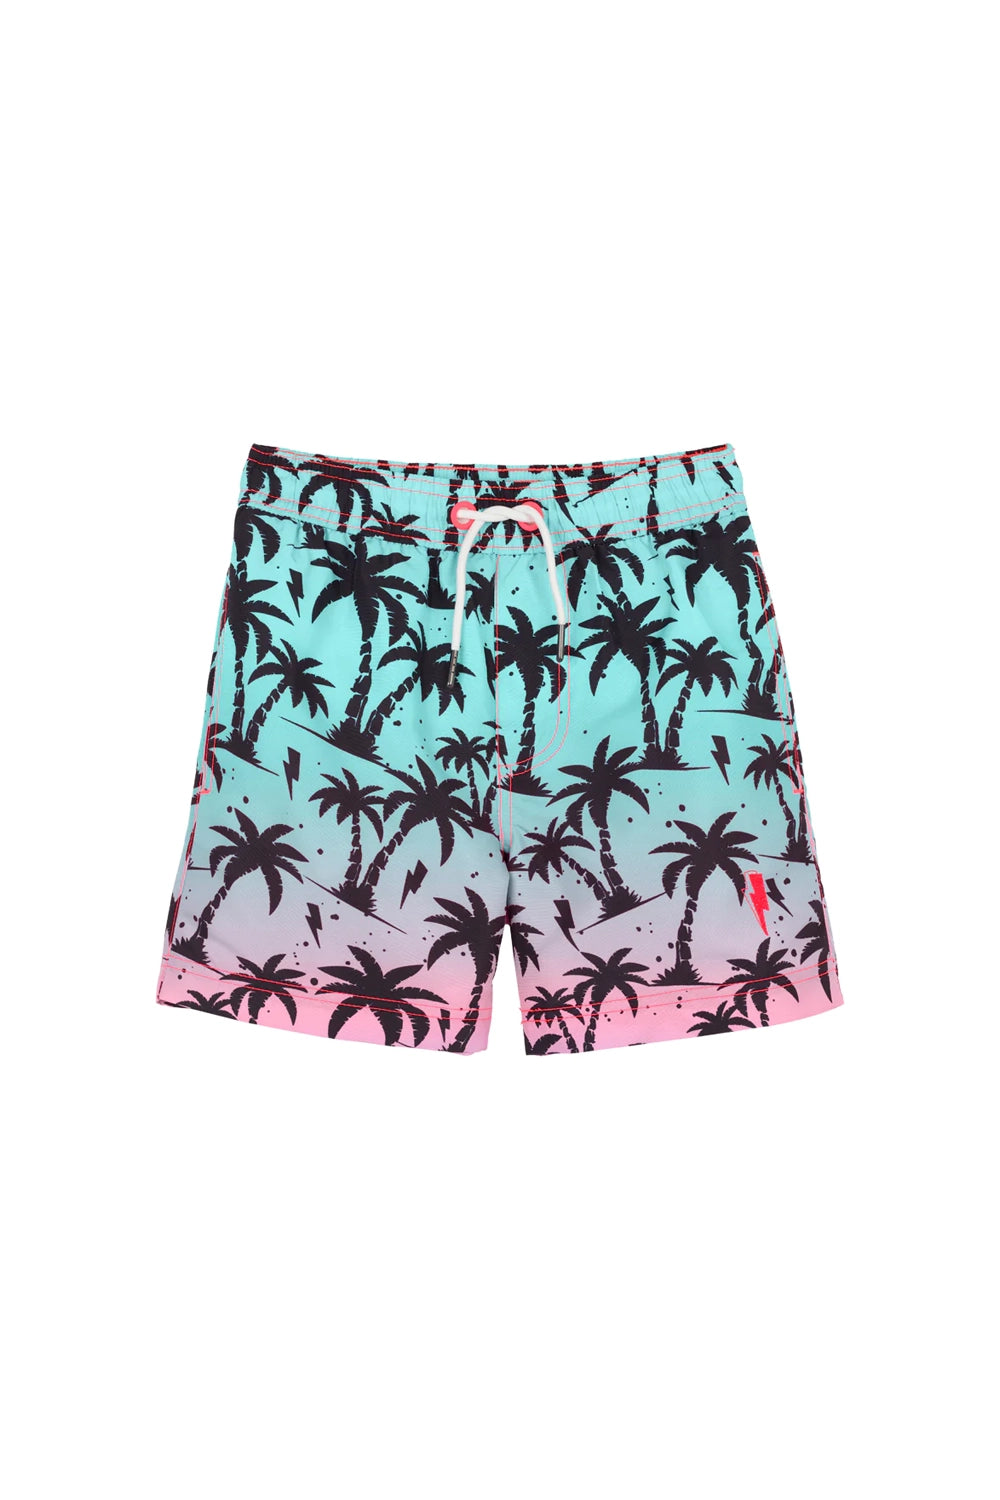 Kids Ombr Palm Swim Shorts